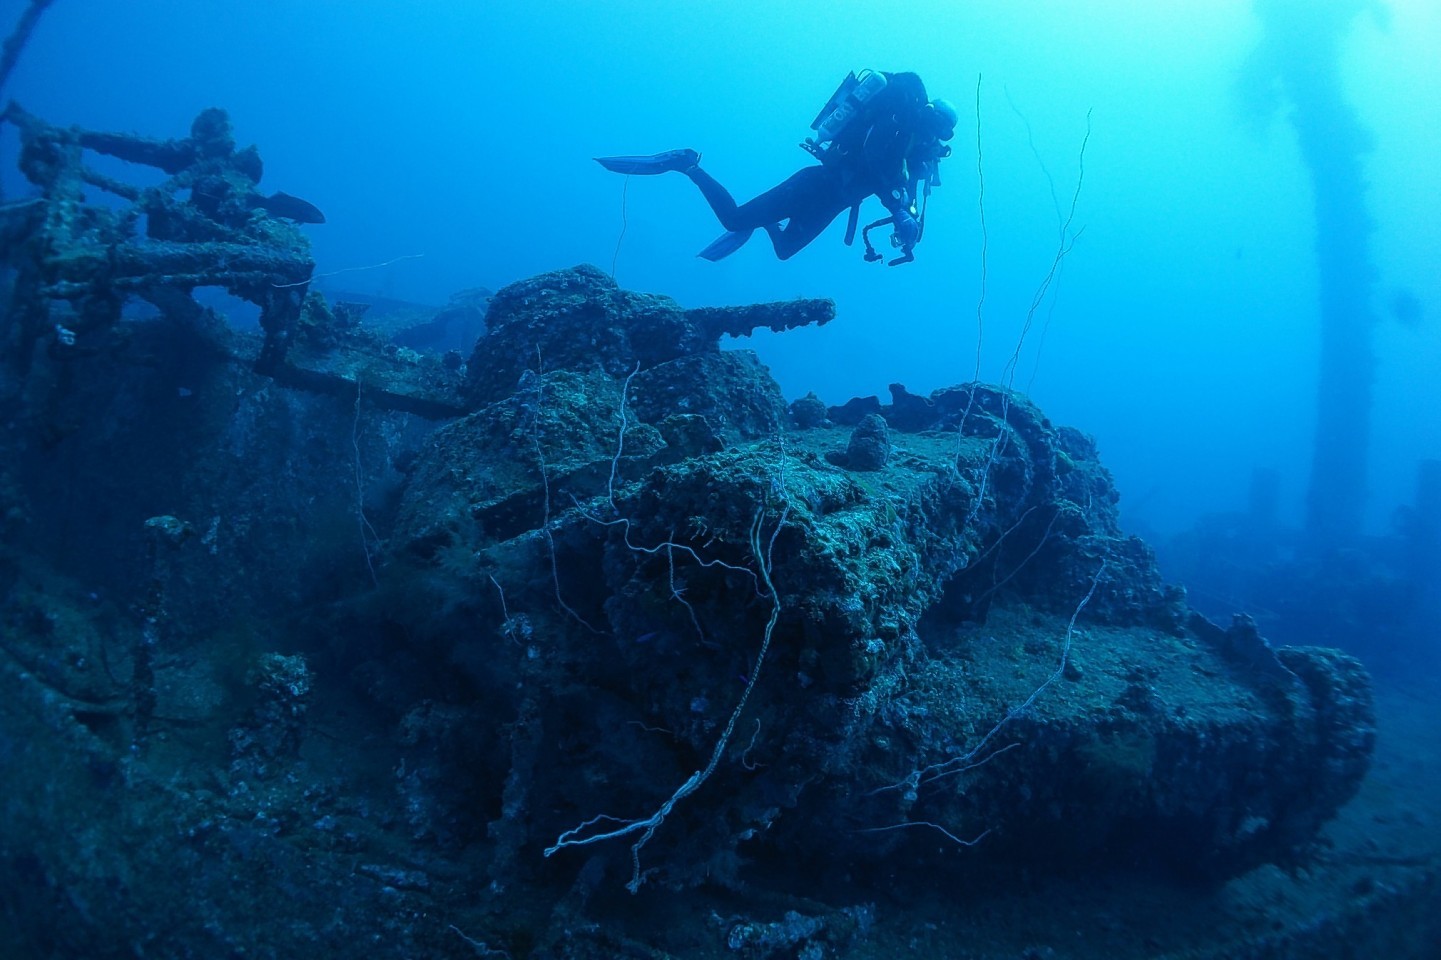 The divers survey the Japanese shipwrecks